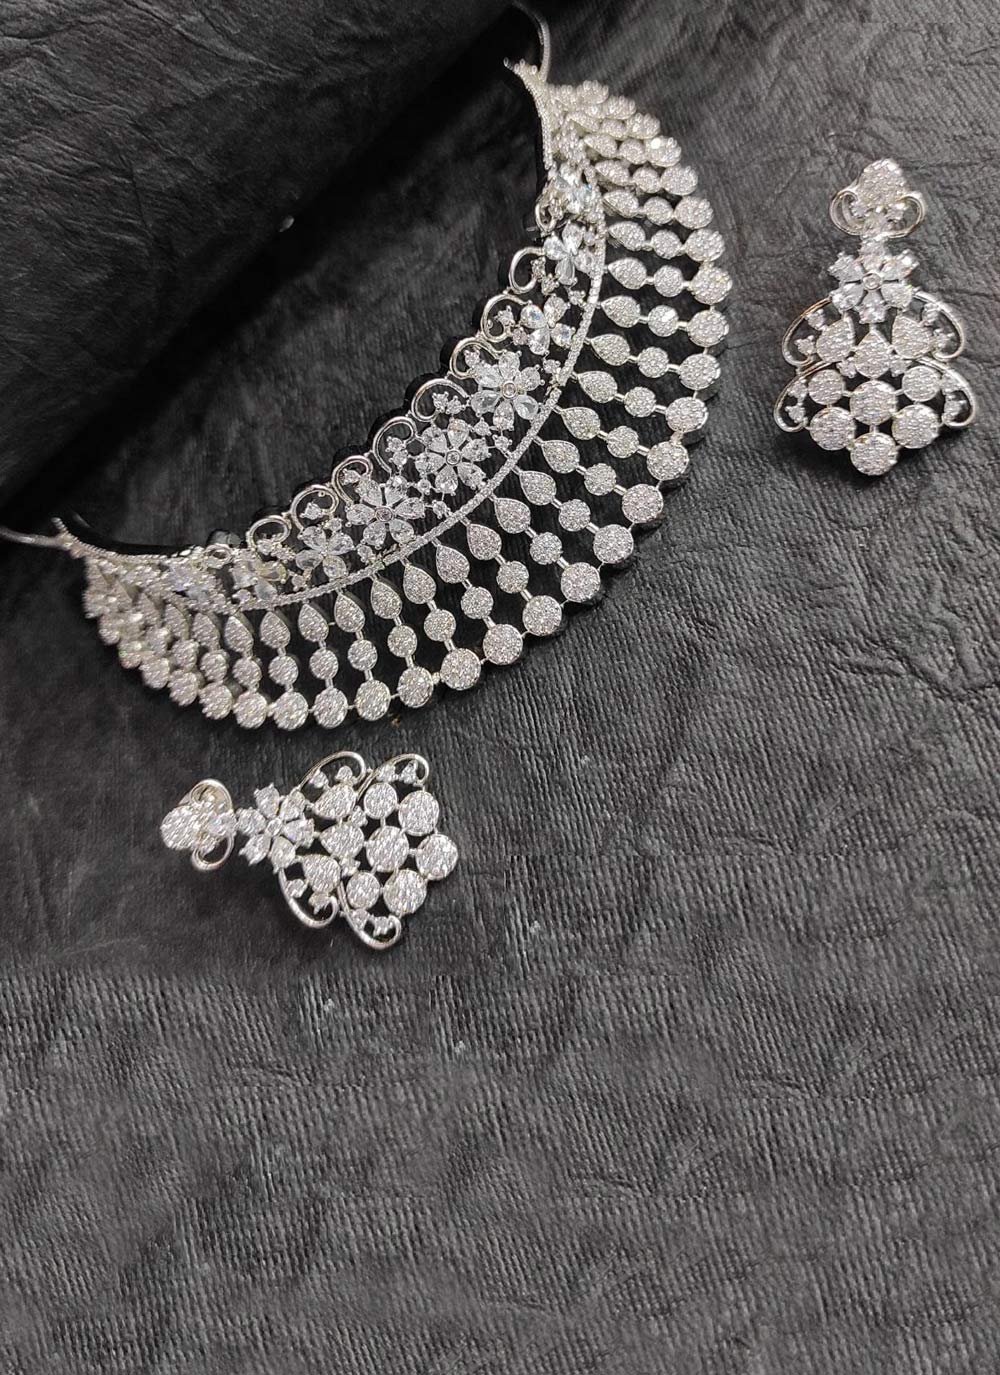 Versatile Silver Rodium Polish Necklace Set For Party